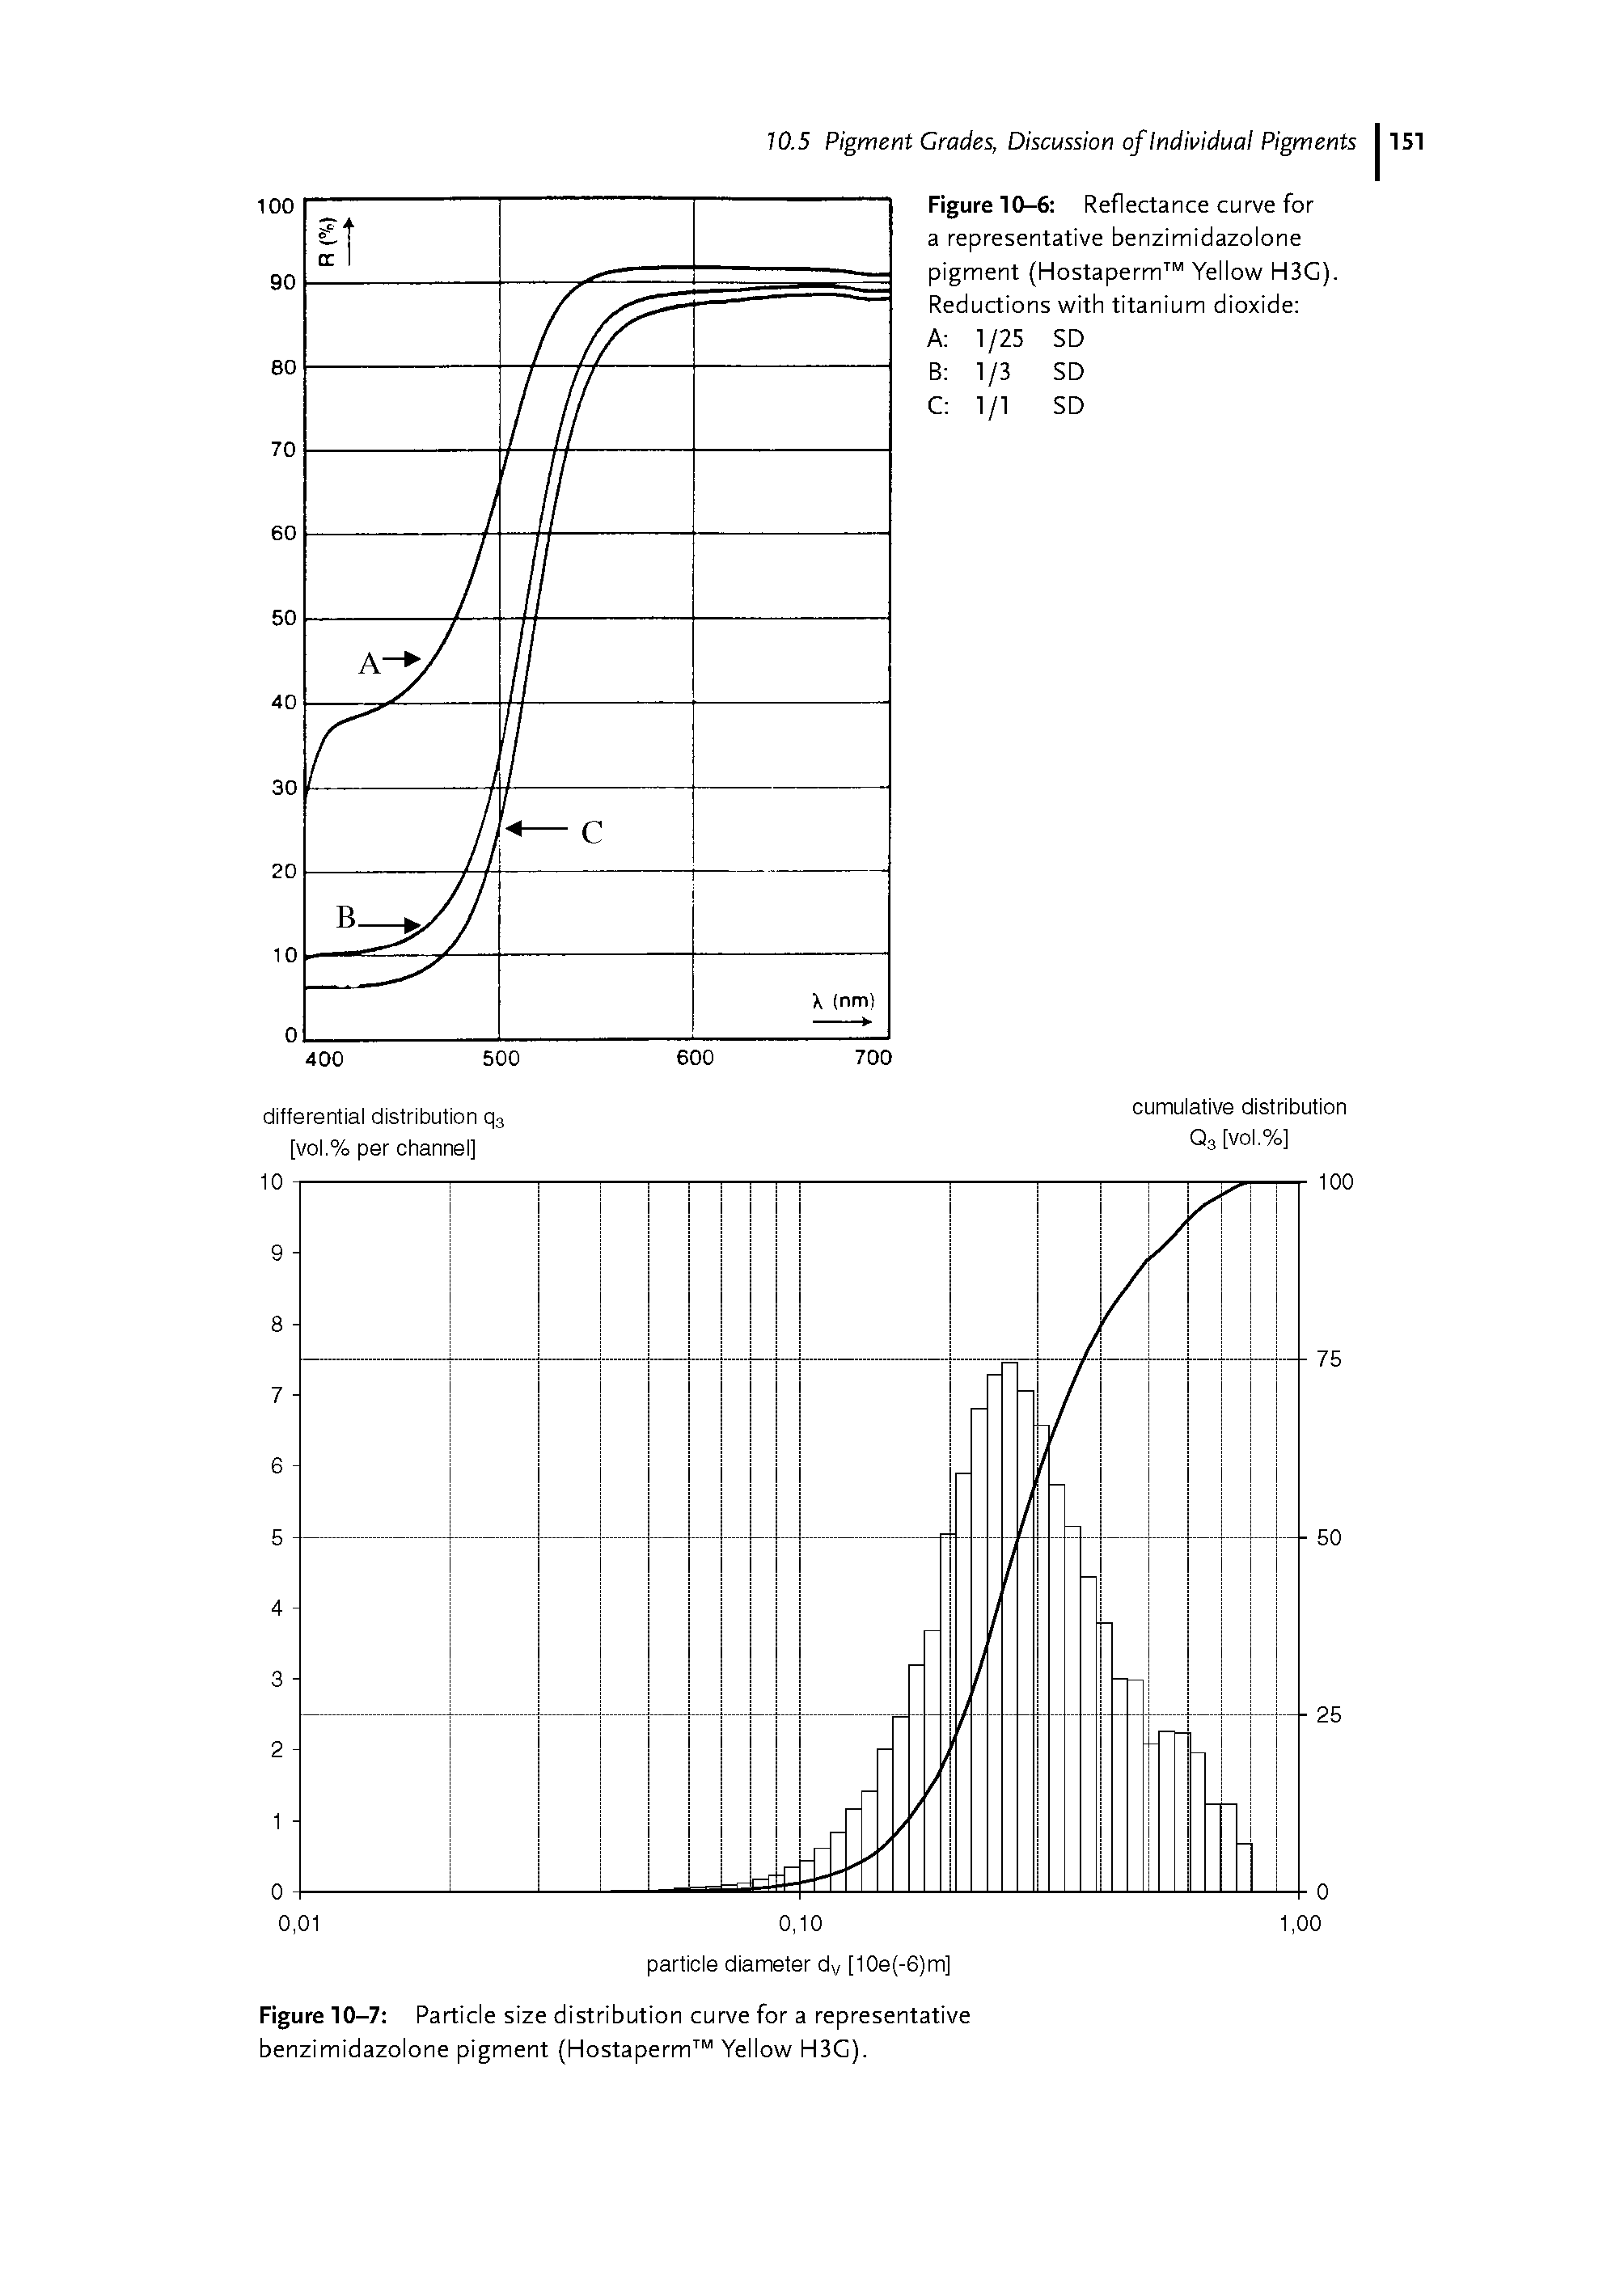 Figure 10-7 Particle size distribution curve for a representative benzimidazolone pigment (Hostaperm Yello A/ H3C).